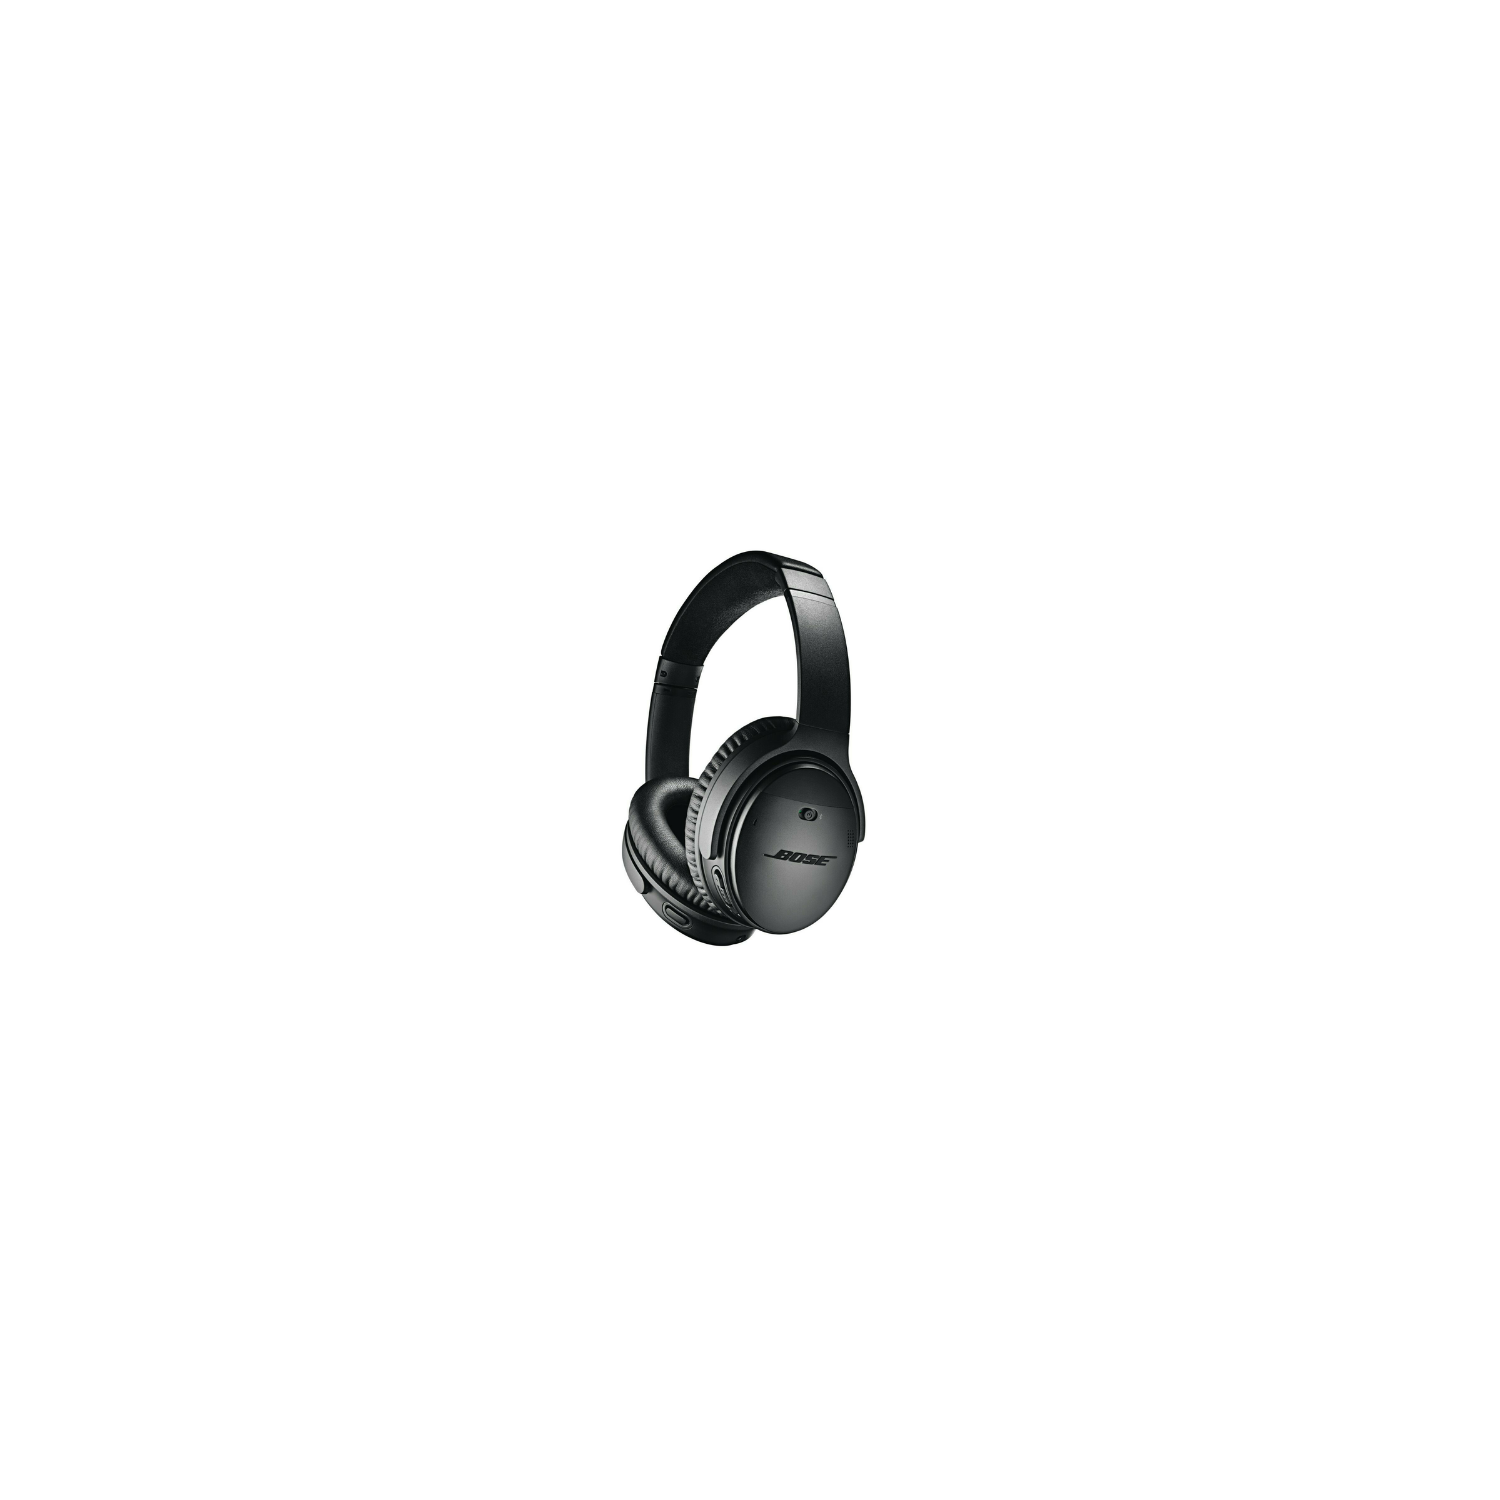 Bose QuietComfort 35 II Over-Ear Noise Cancelling Bluetooth Headphones - Black - Certified Refurbished